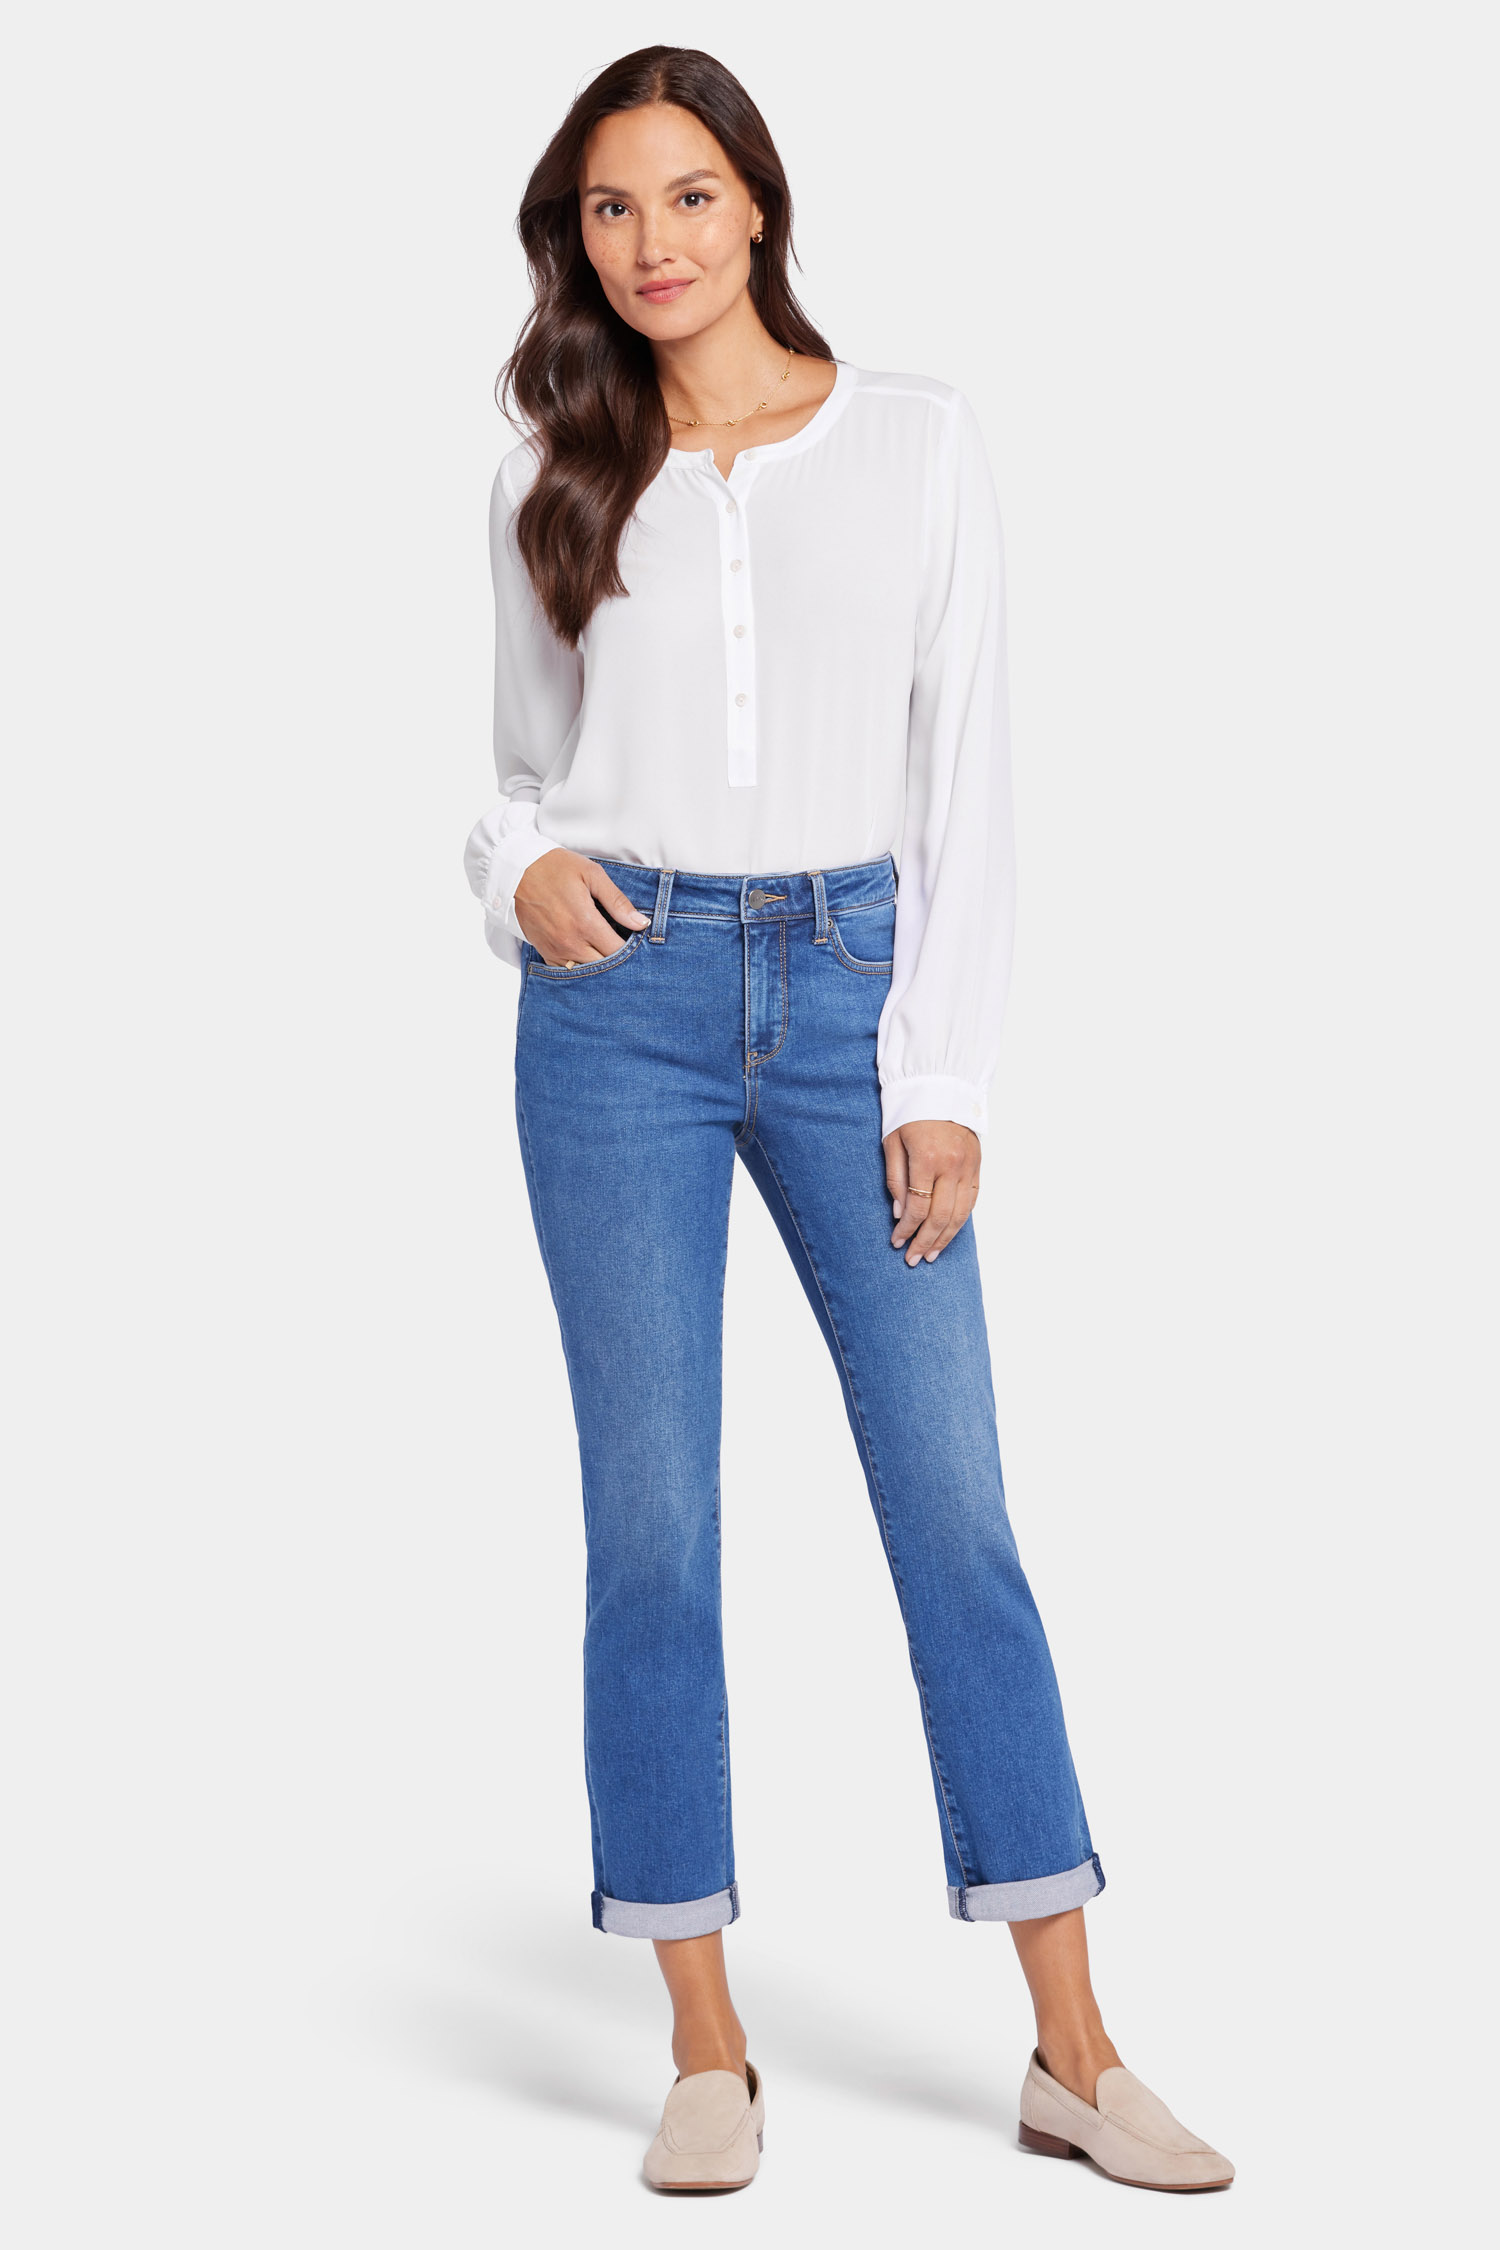 Women's Petite Jeans - Slim, Wide & Straight Petite | NYDJ Apparel